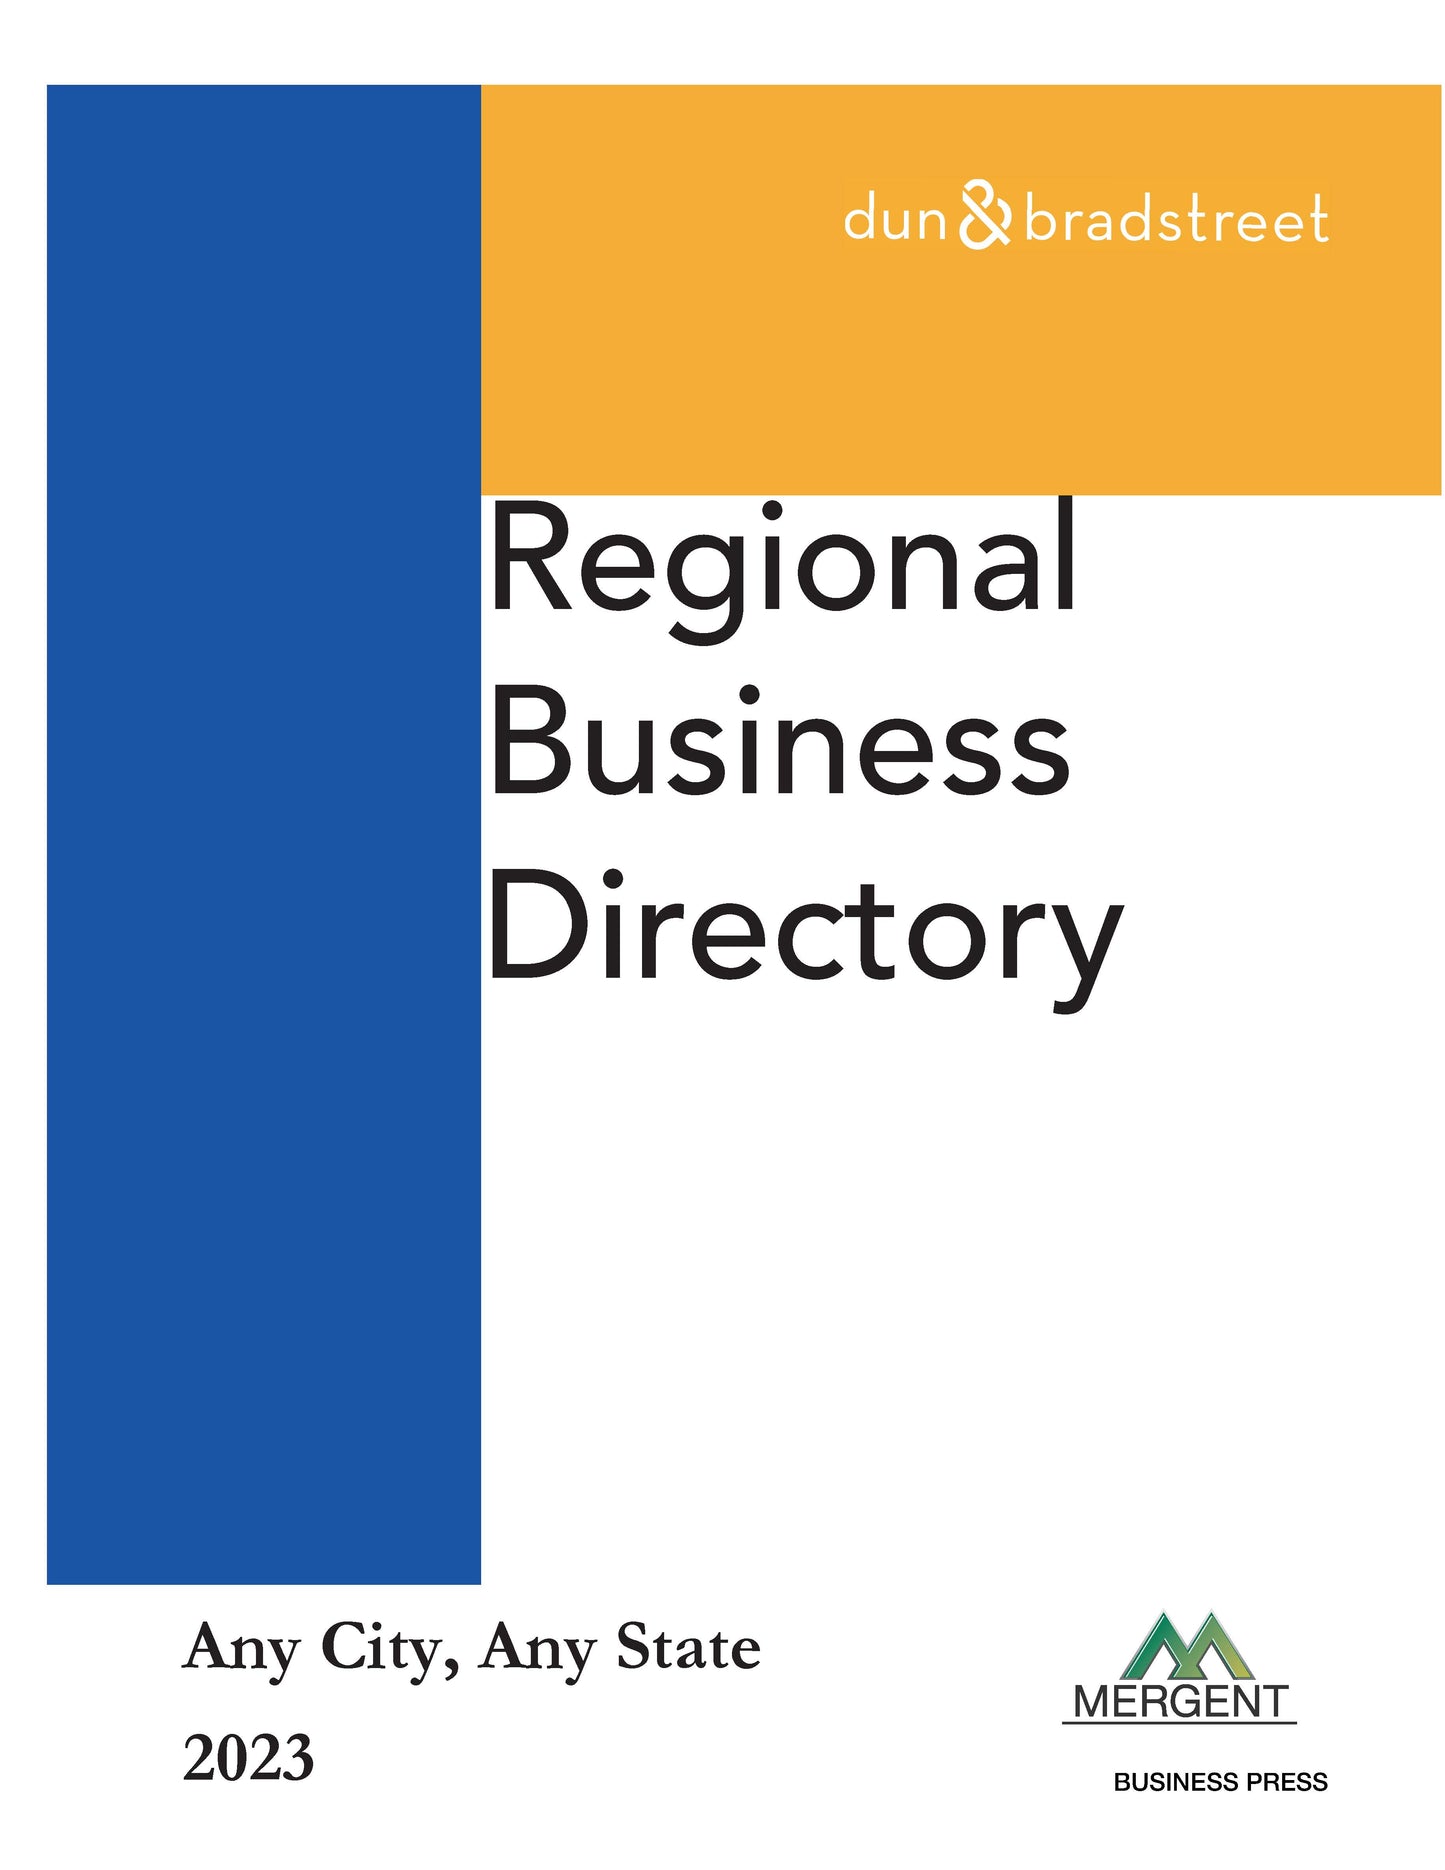 Regional Business Directory - Charlotte/Greensboro, NC